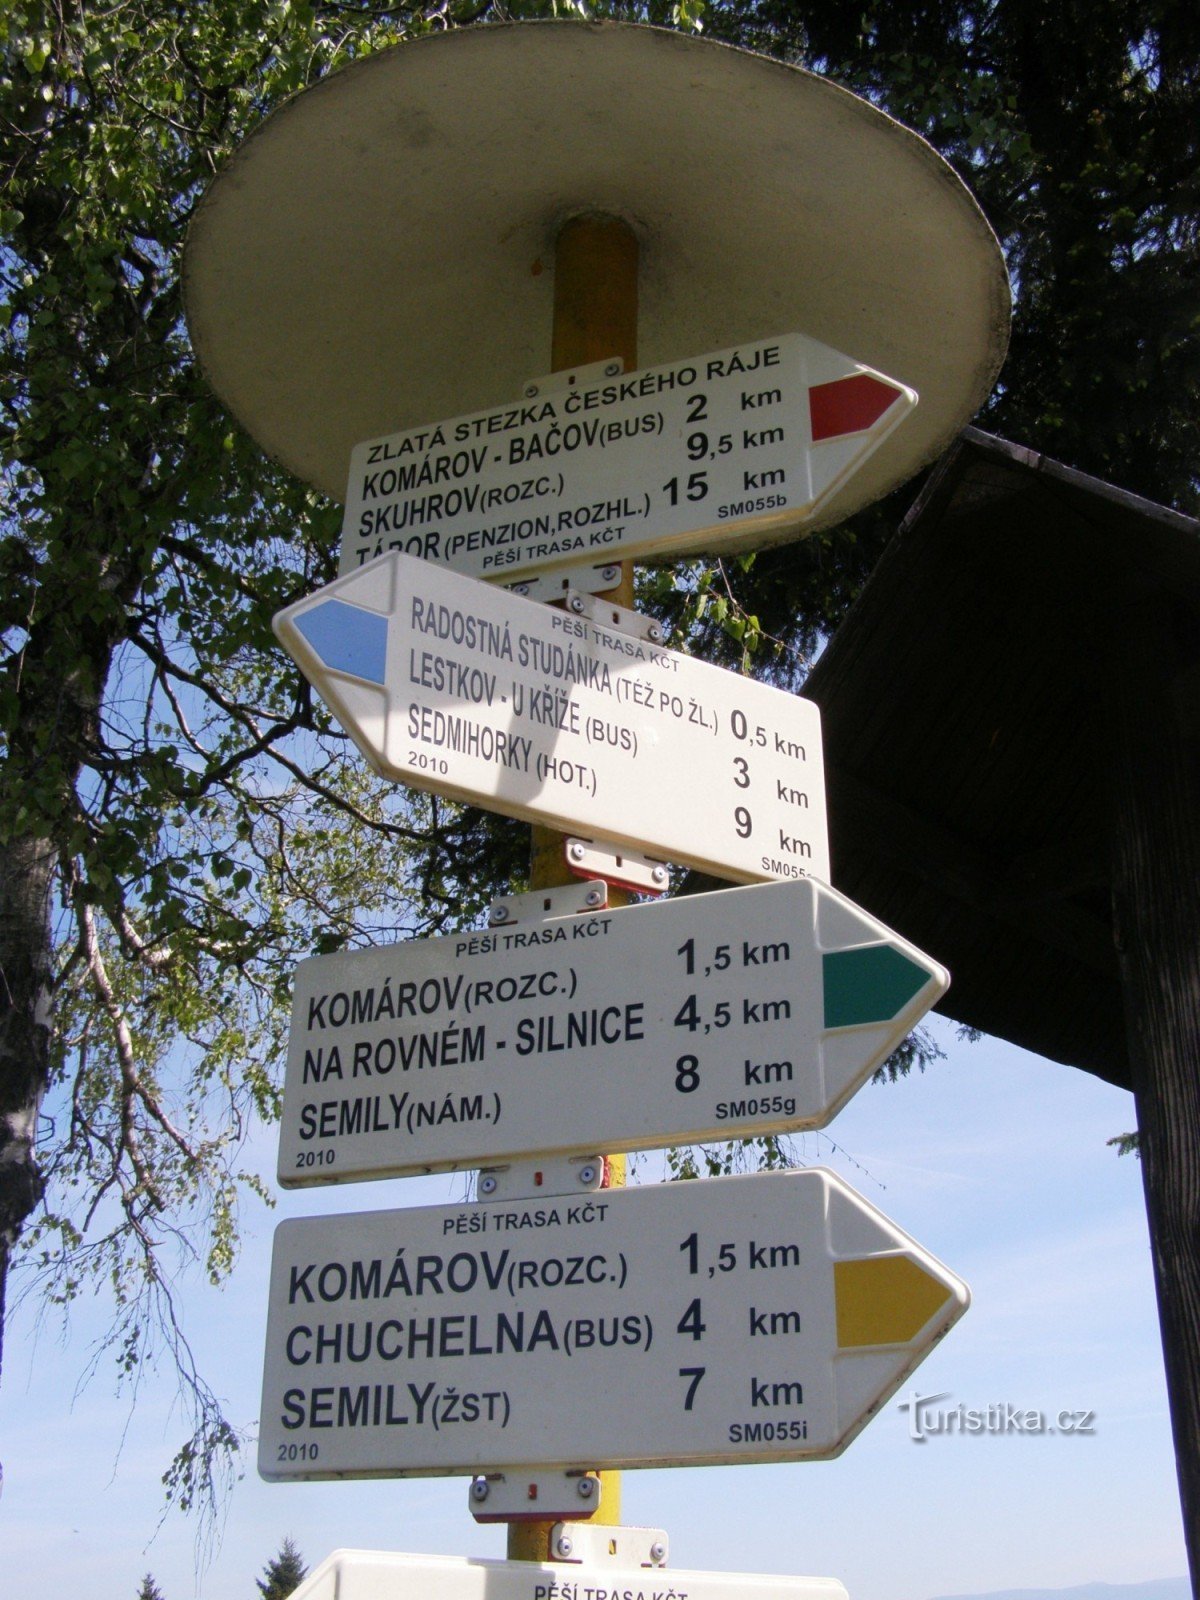 toeristisch kruispunt Kozákov